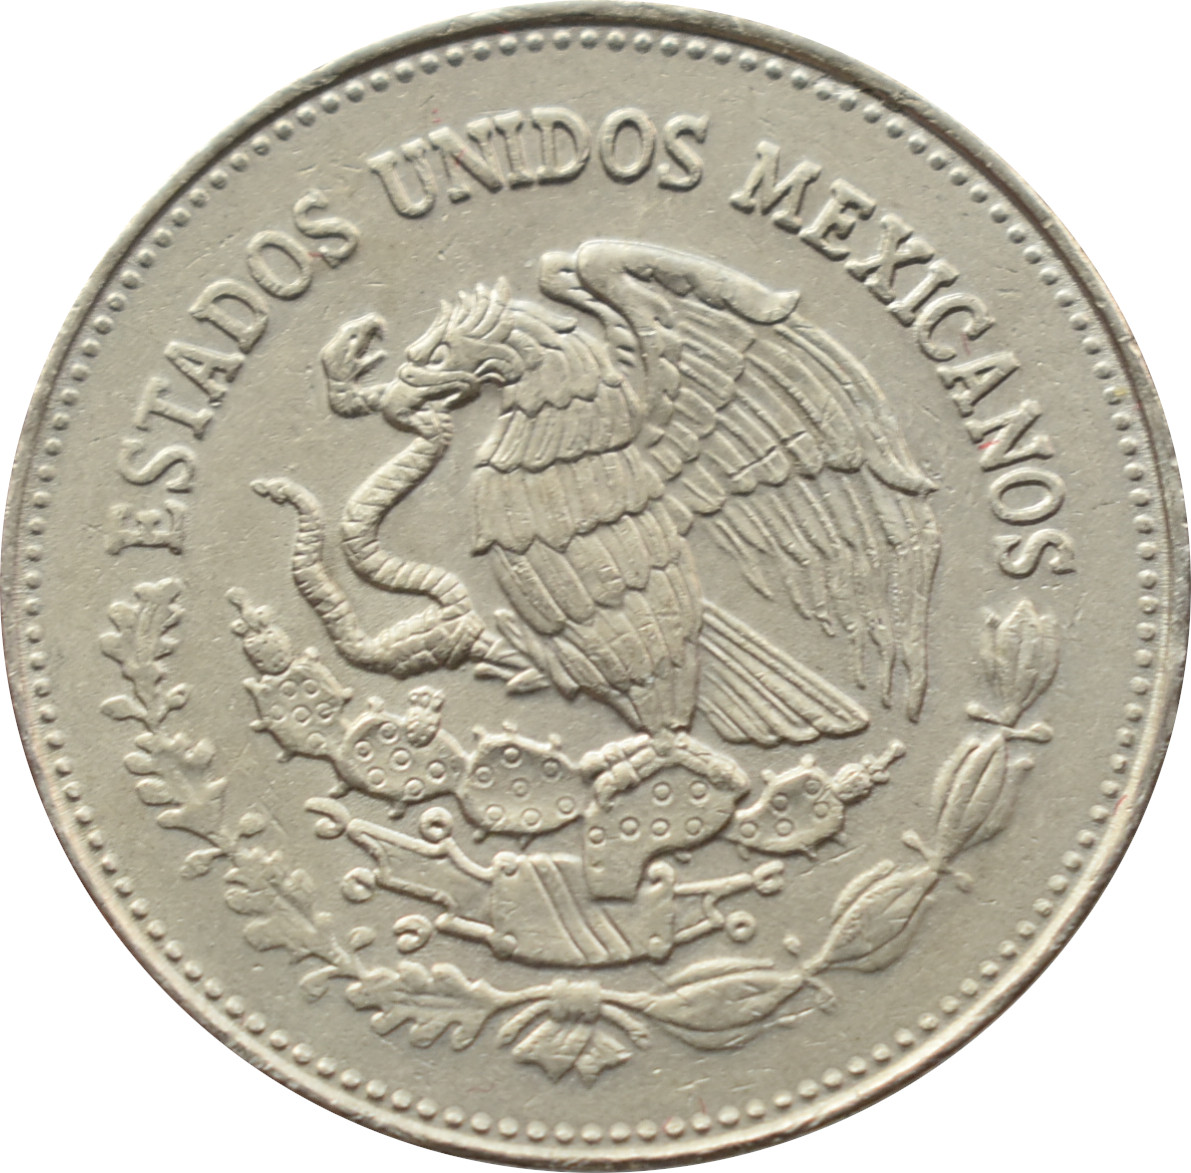 Mexiko 200 Pesos 1985